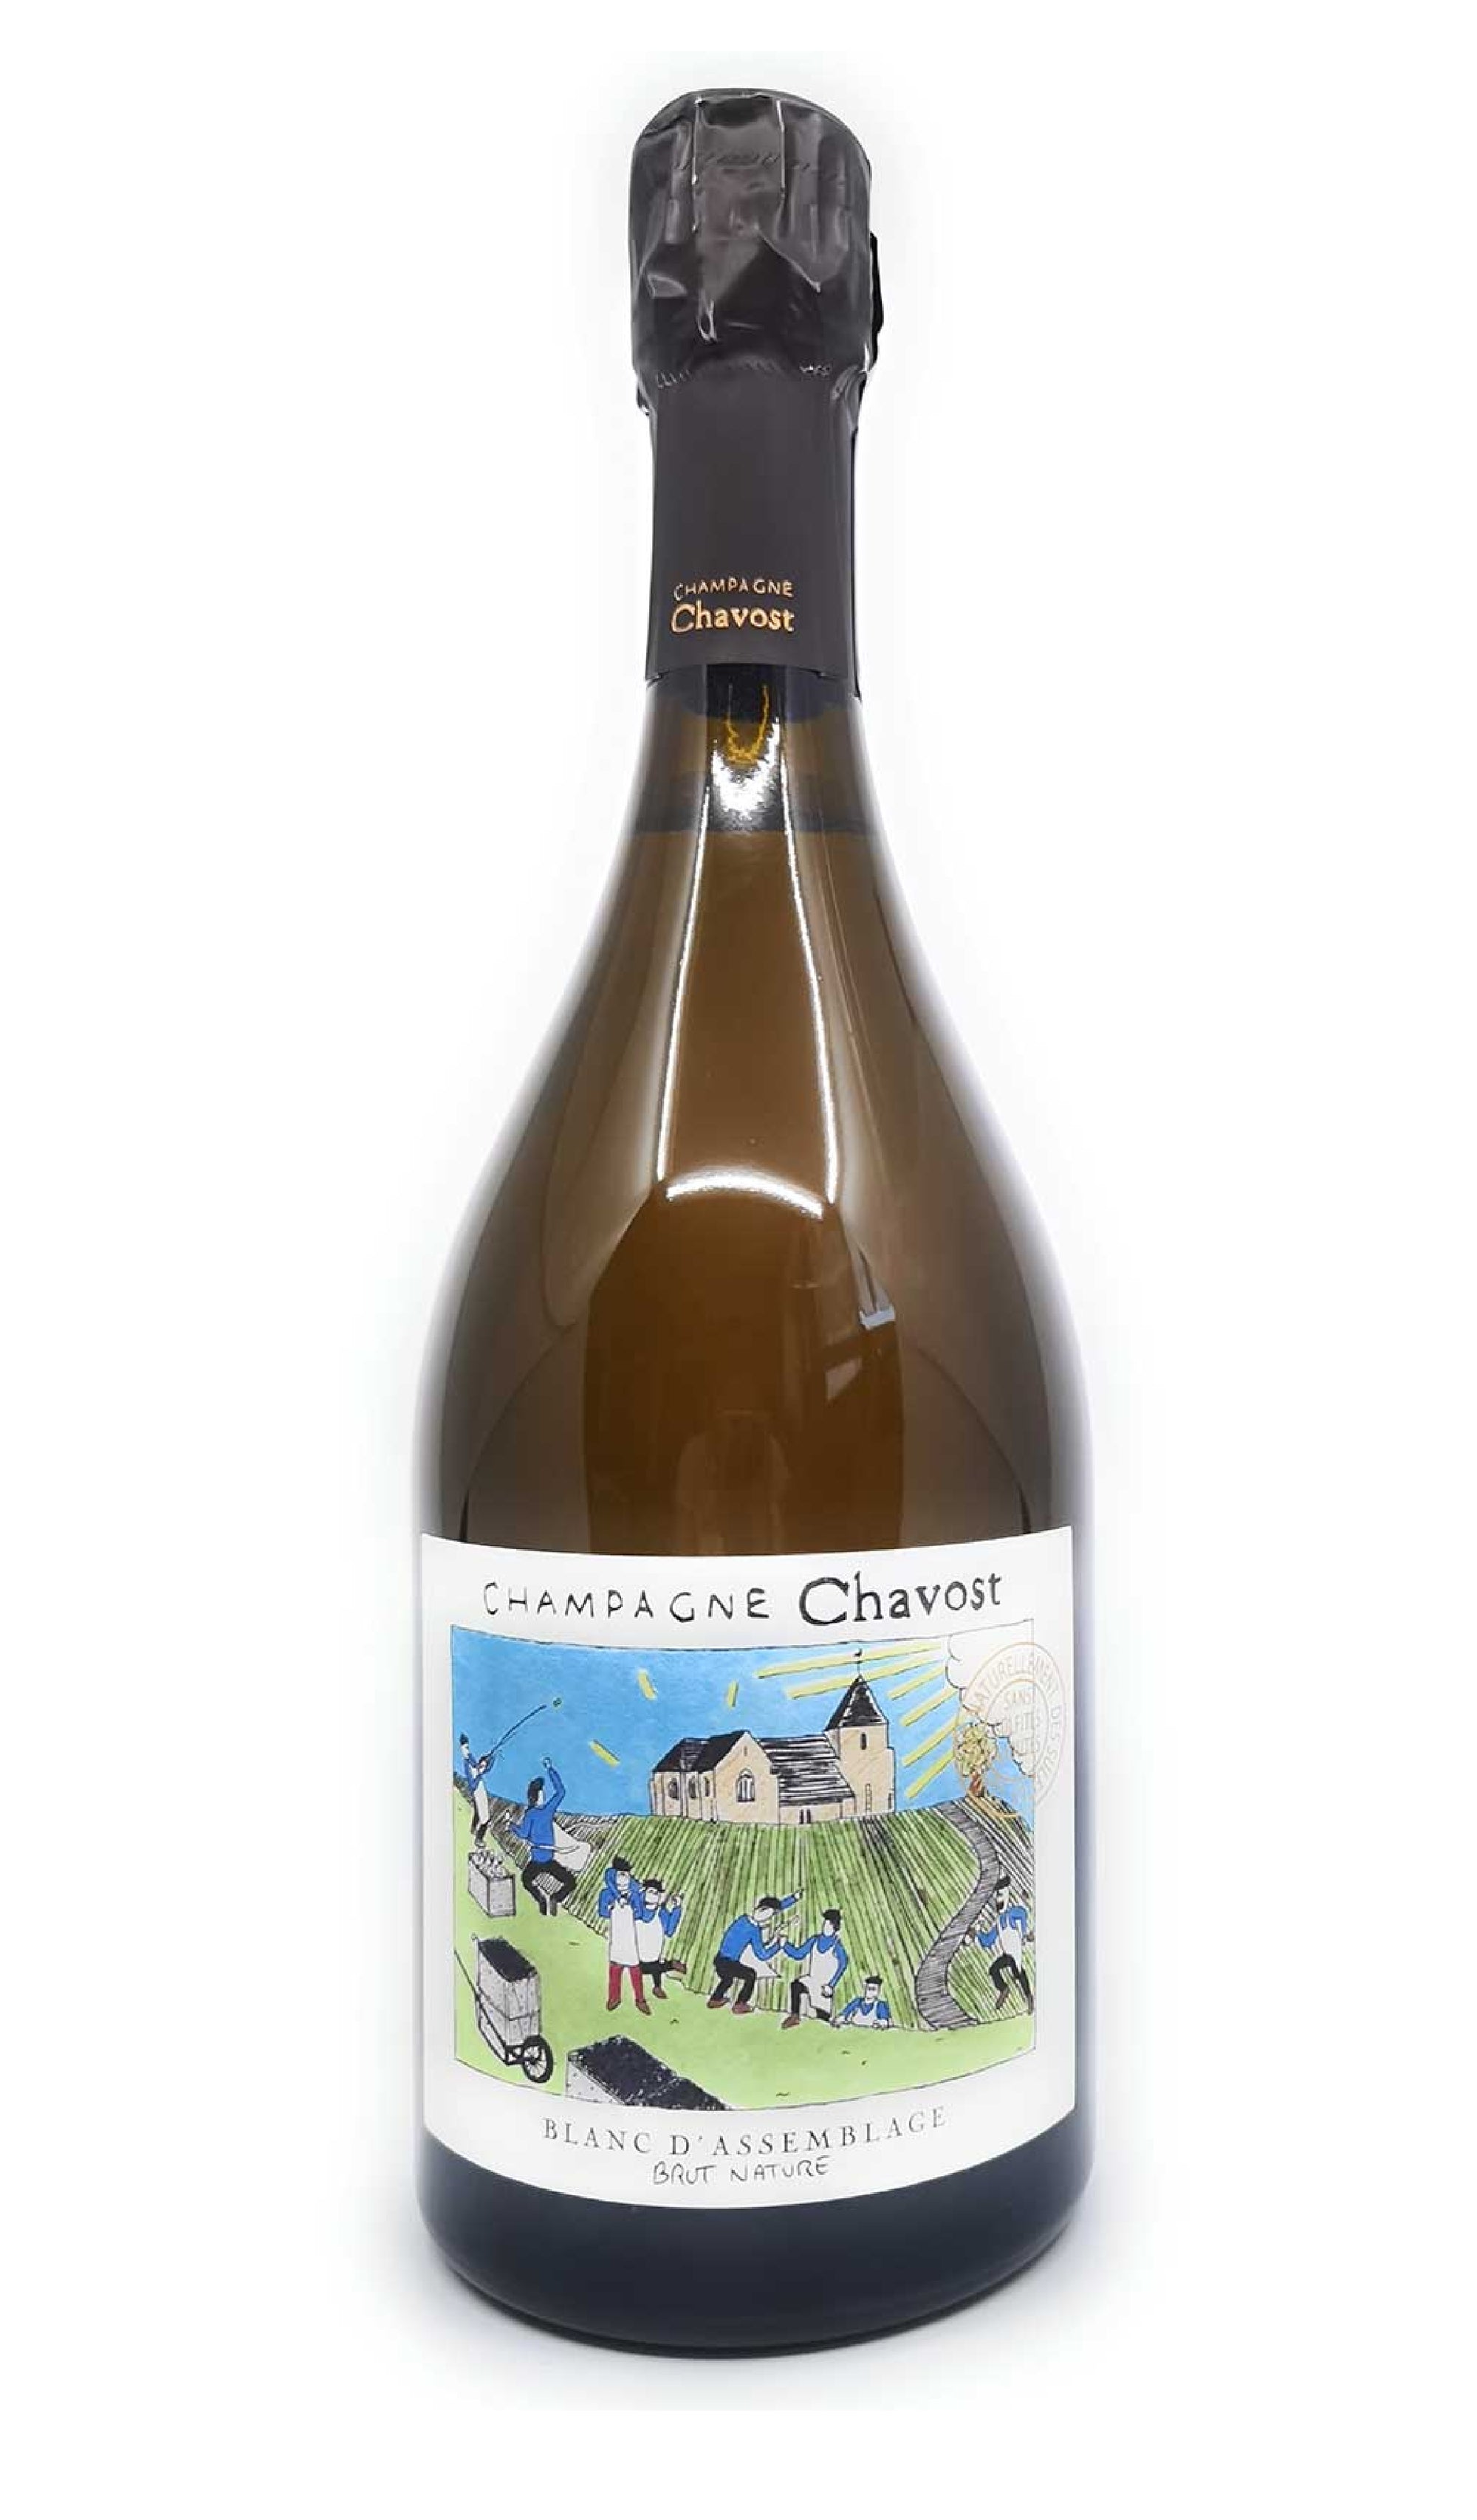 Chavost - “Blanc d’Assemblage” Champagne Brut Nature NV (750ml)